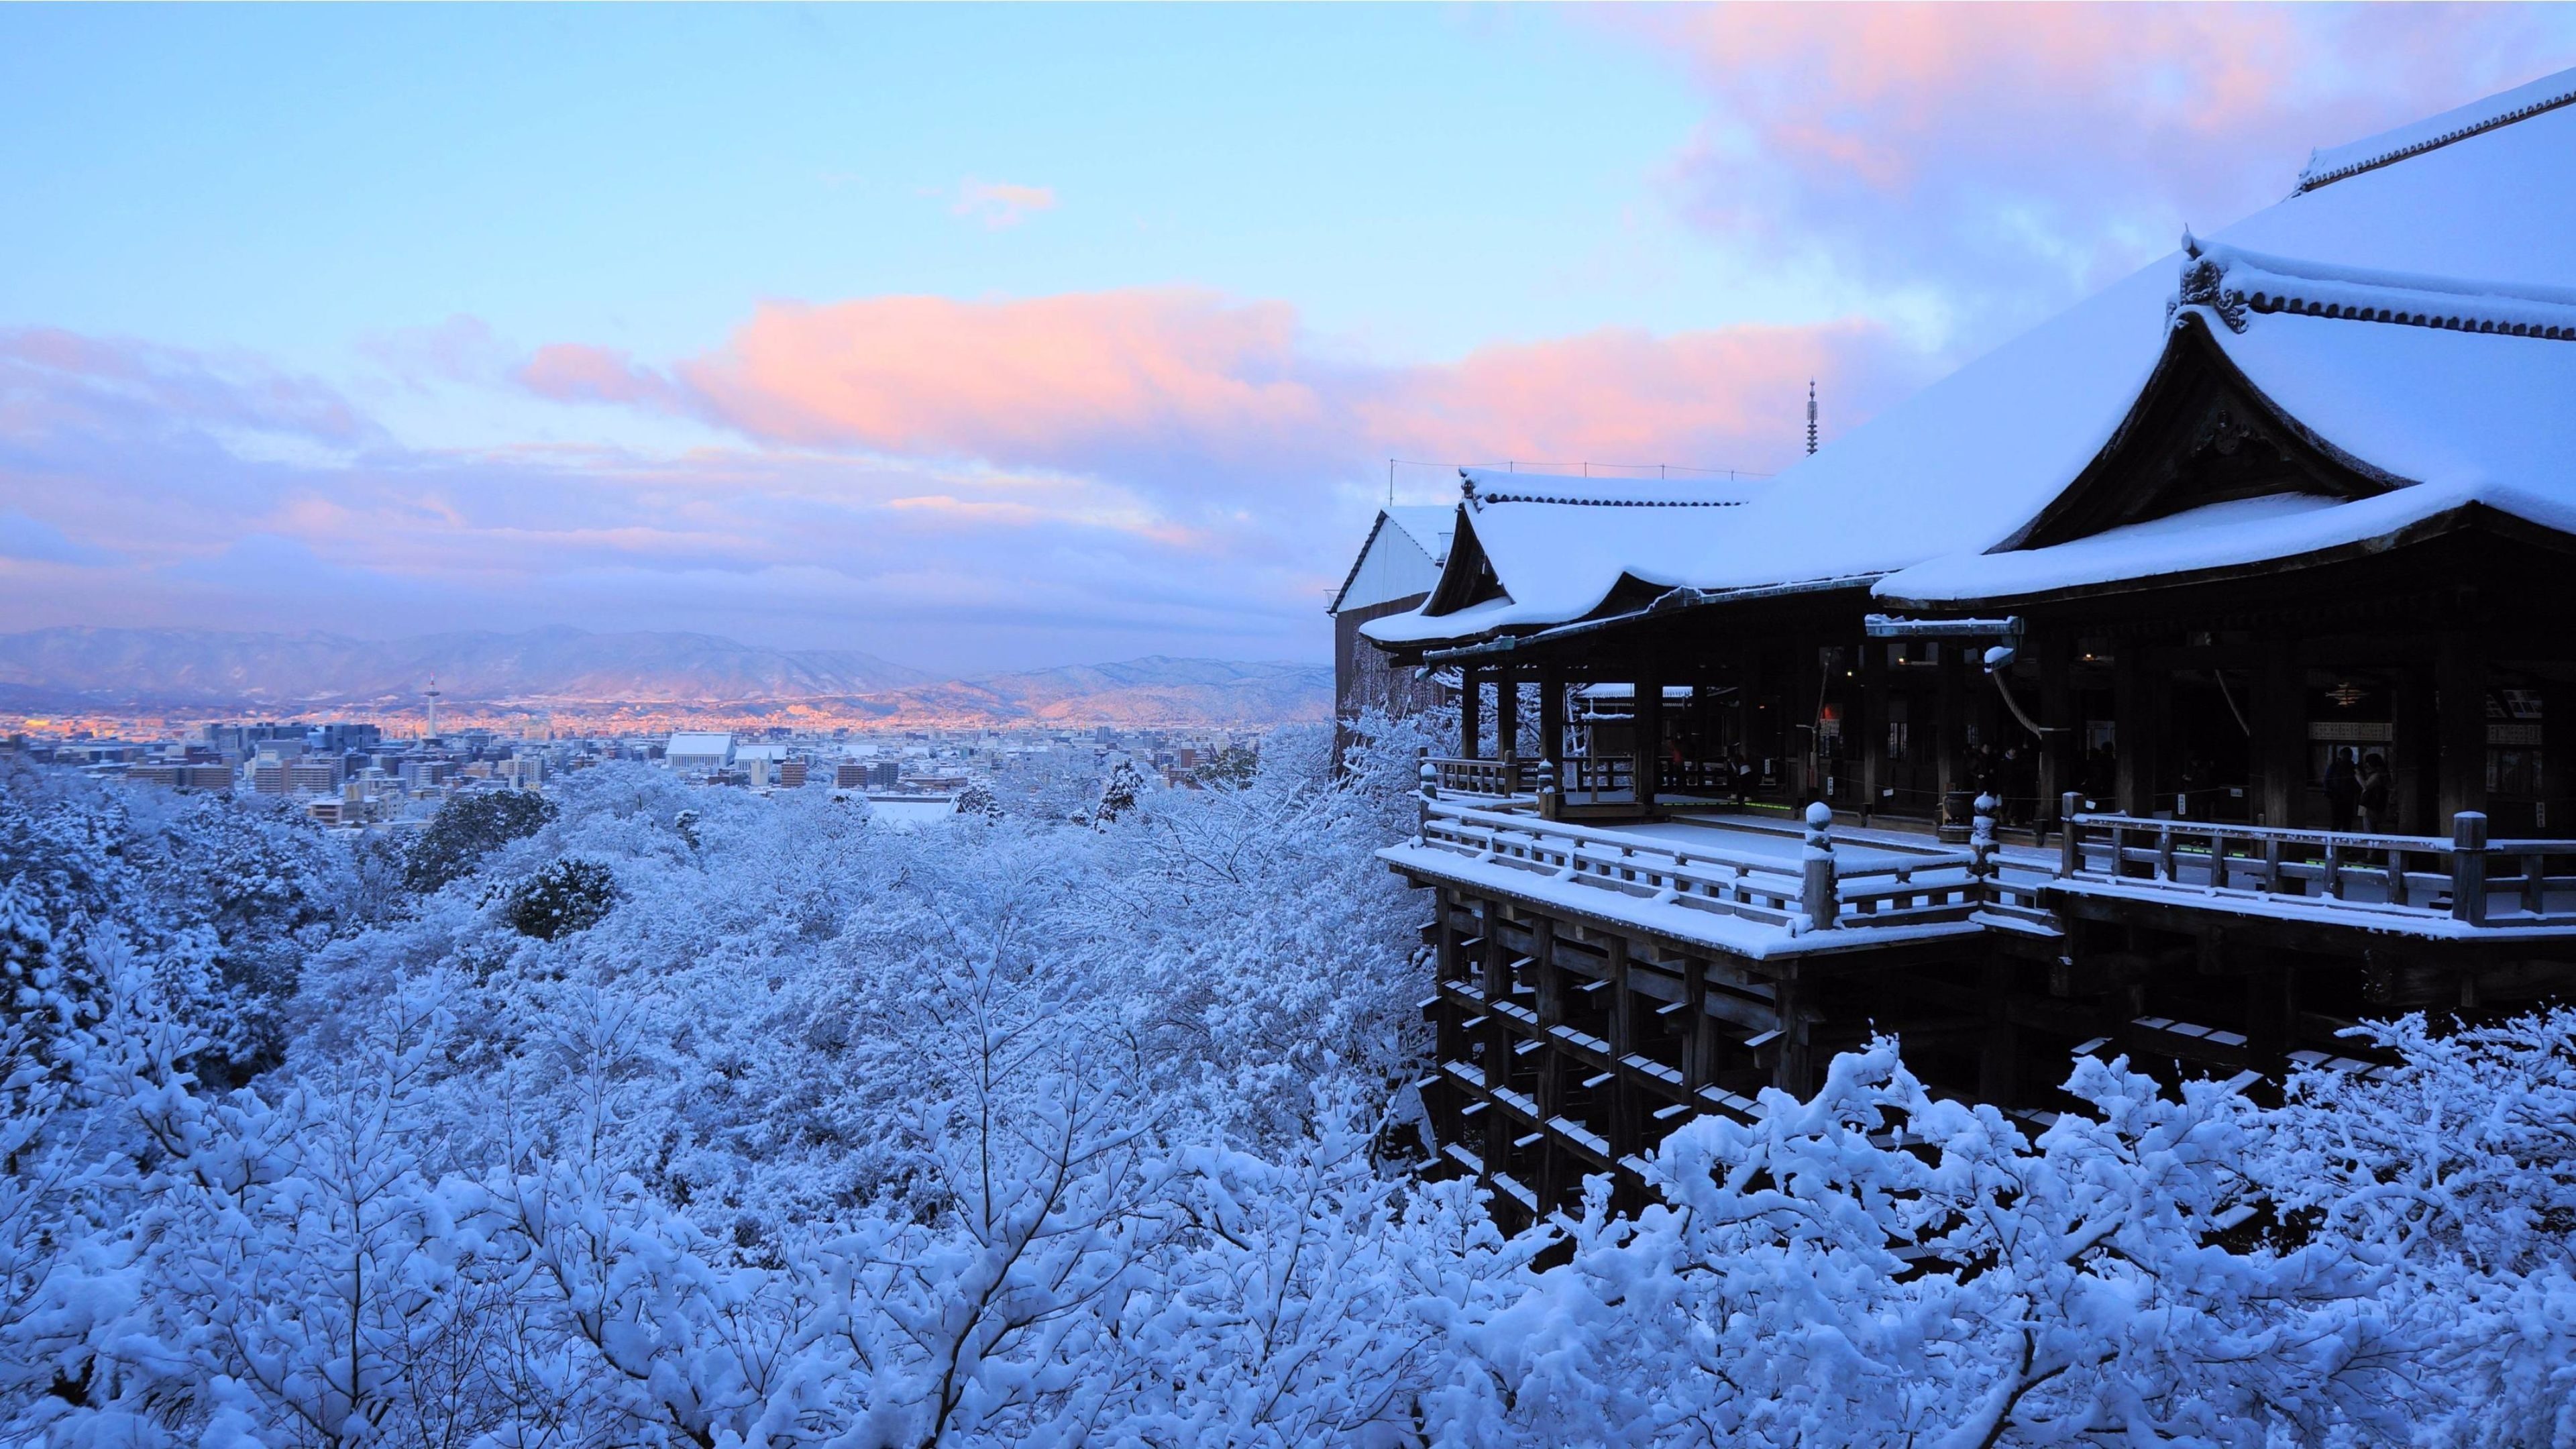 Amazing Winter 2016 Kyoto, Japan 4K Wallpaper. Free 4K Wallpaper. Winter picture, Kyoto japan, Winter in japan